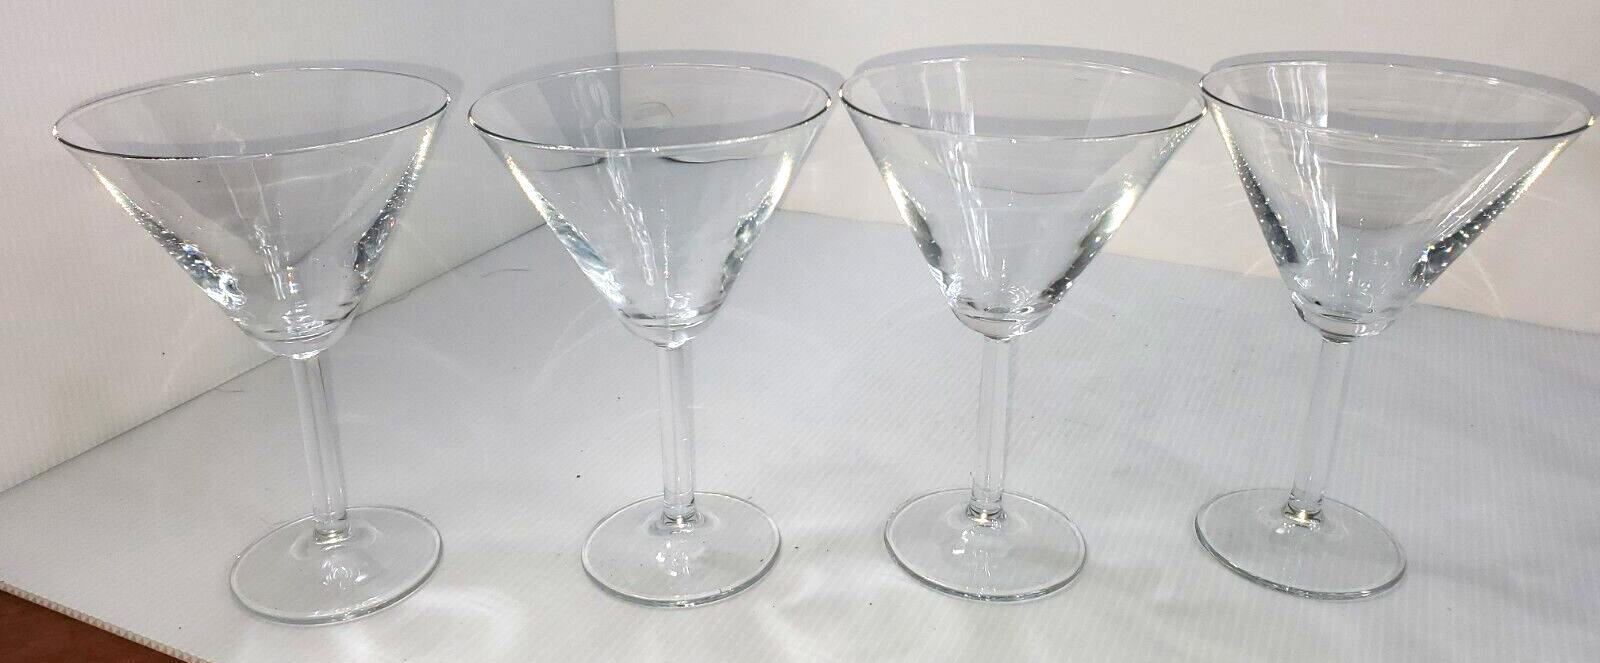 Luigi Bormioli Set of 4 Champagne Blown-Crystal Glasses-Light show - $10.99